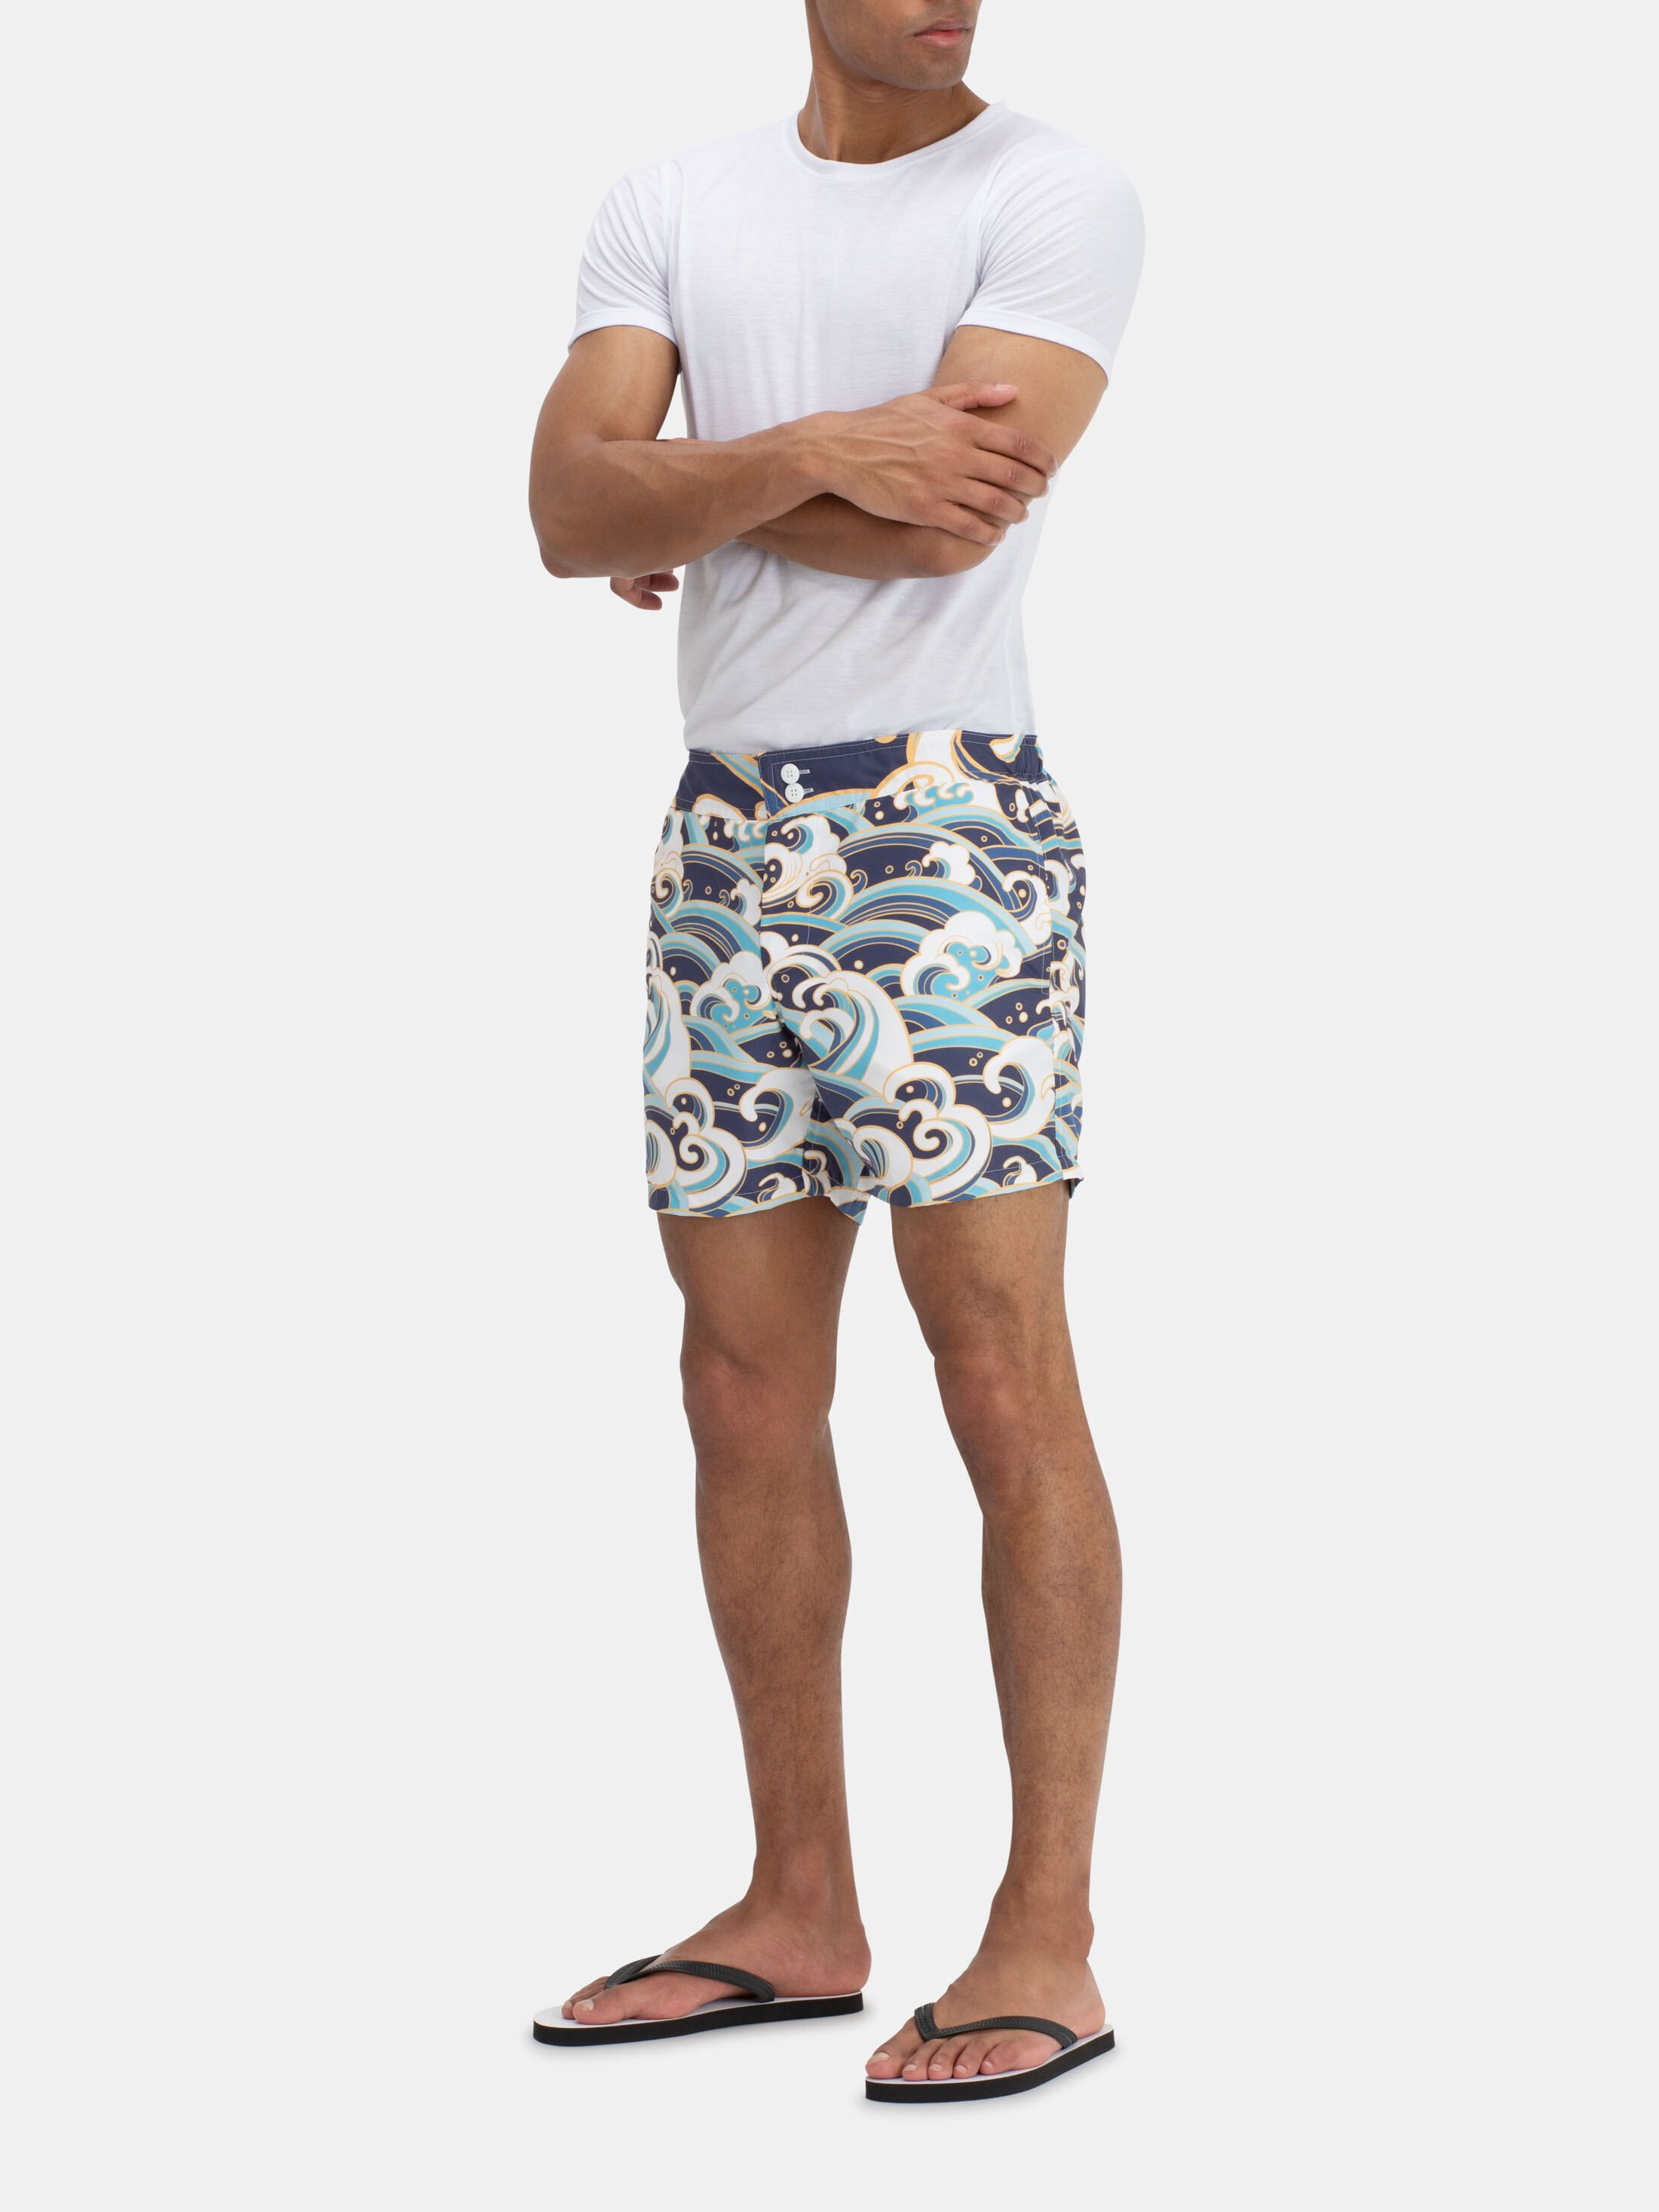 custom quick dry shorts